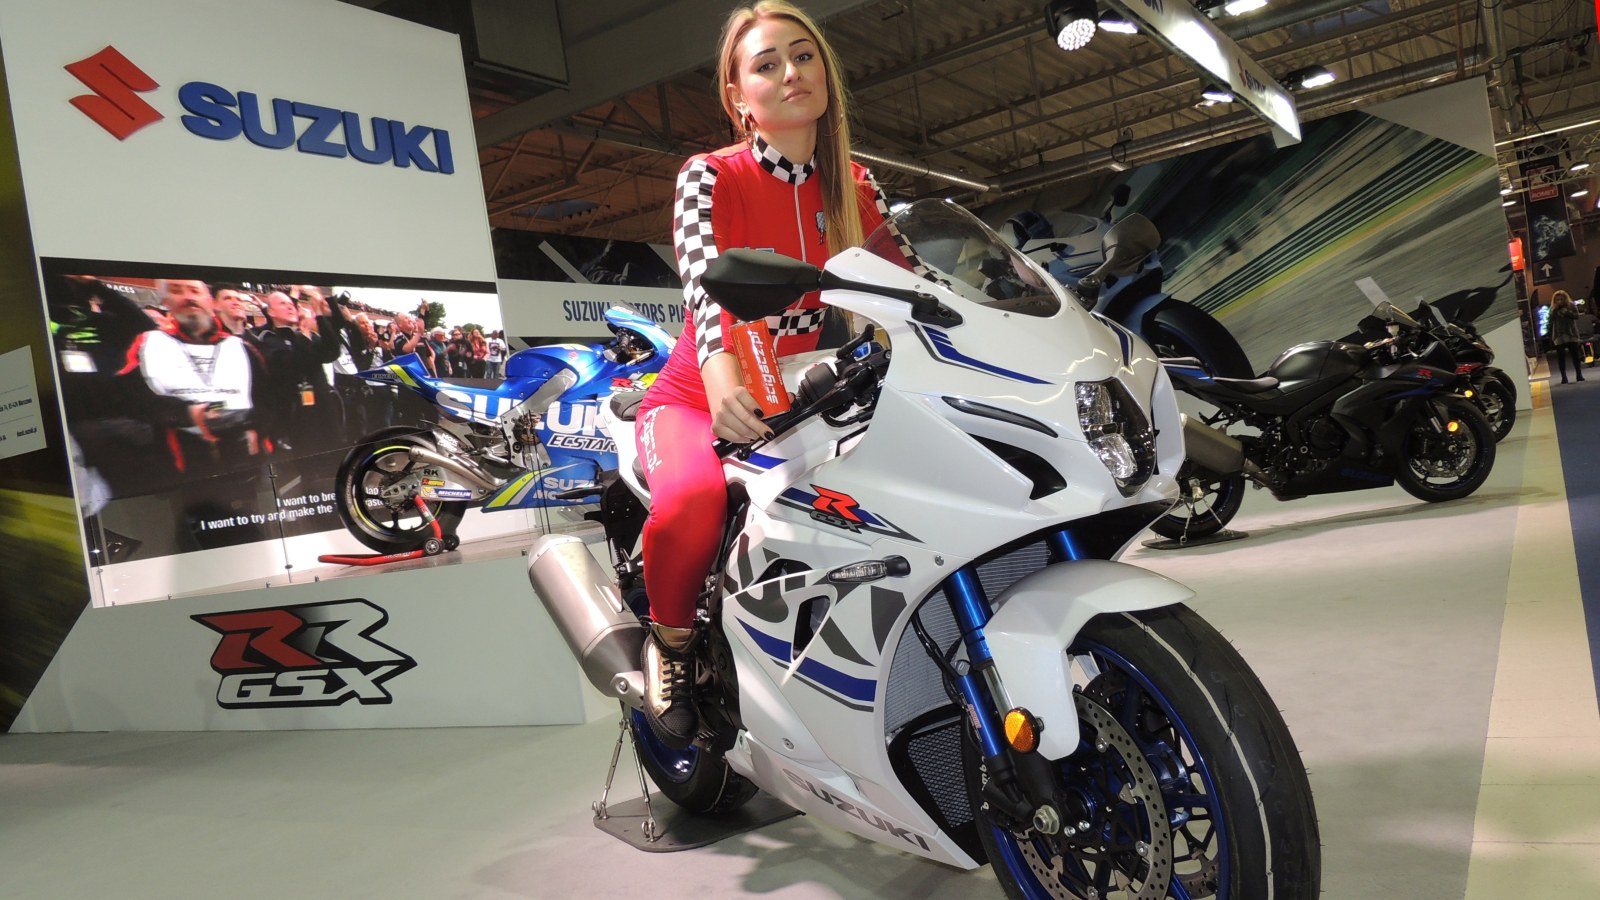 Warsaw Motorcycle Show 2018 Suzuki 27 z